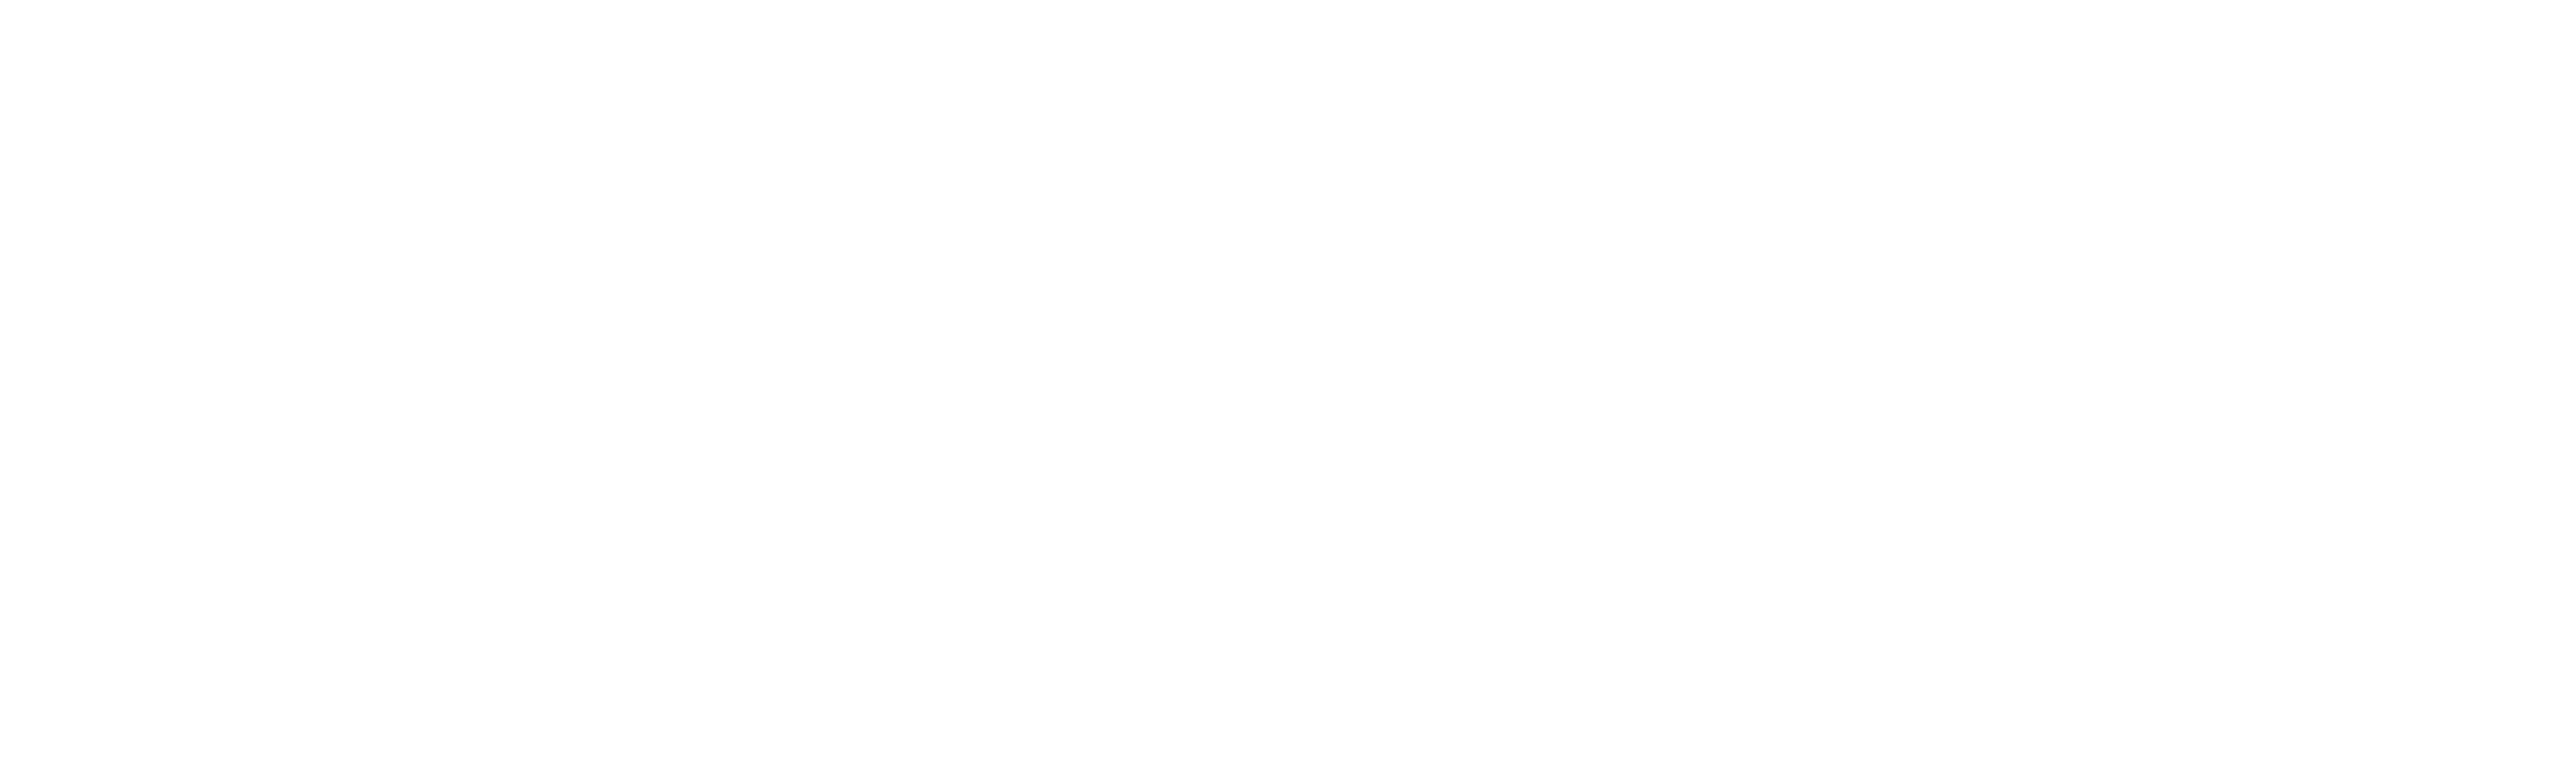 Logo diwokiel 